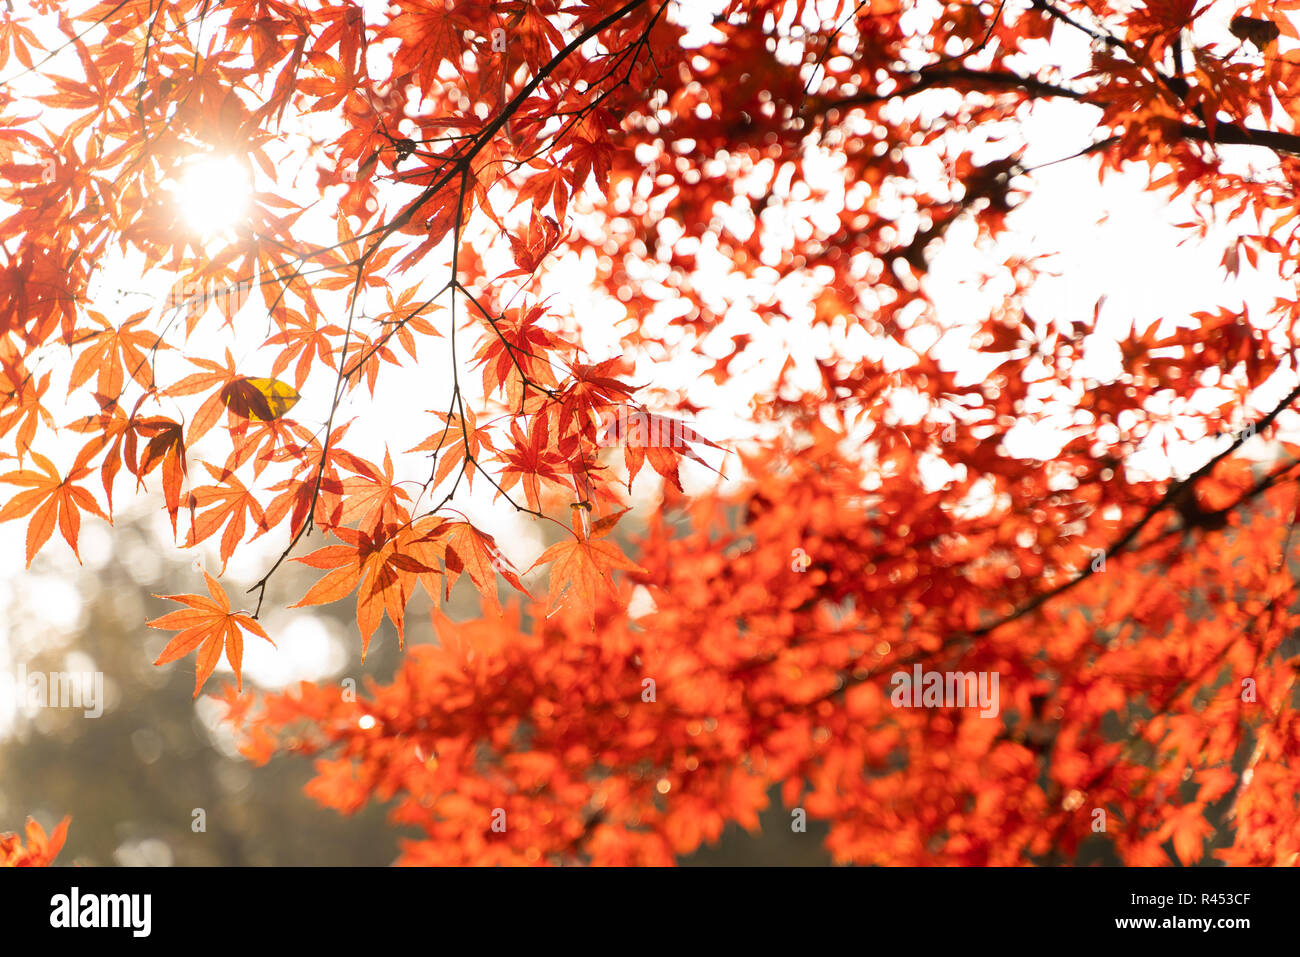 (181125) - CHANGSHA, November 25, 2018 (Xinhua) - Foto an November 25, 2018 zeigt die Blätter rot von yuelu Berg in Changsha gefärbt, zentralen Hunan Provinz Chinas. (Xinhua / Zhang Xiaoyu) (Wsw) Stockfoto